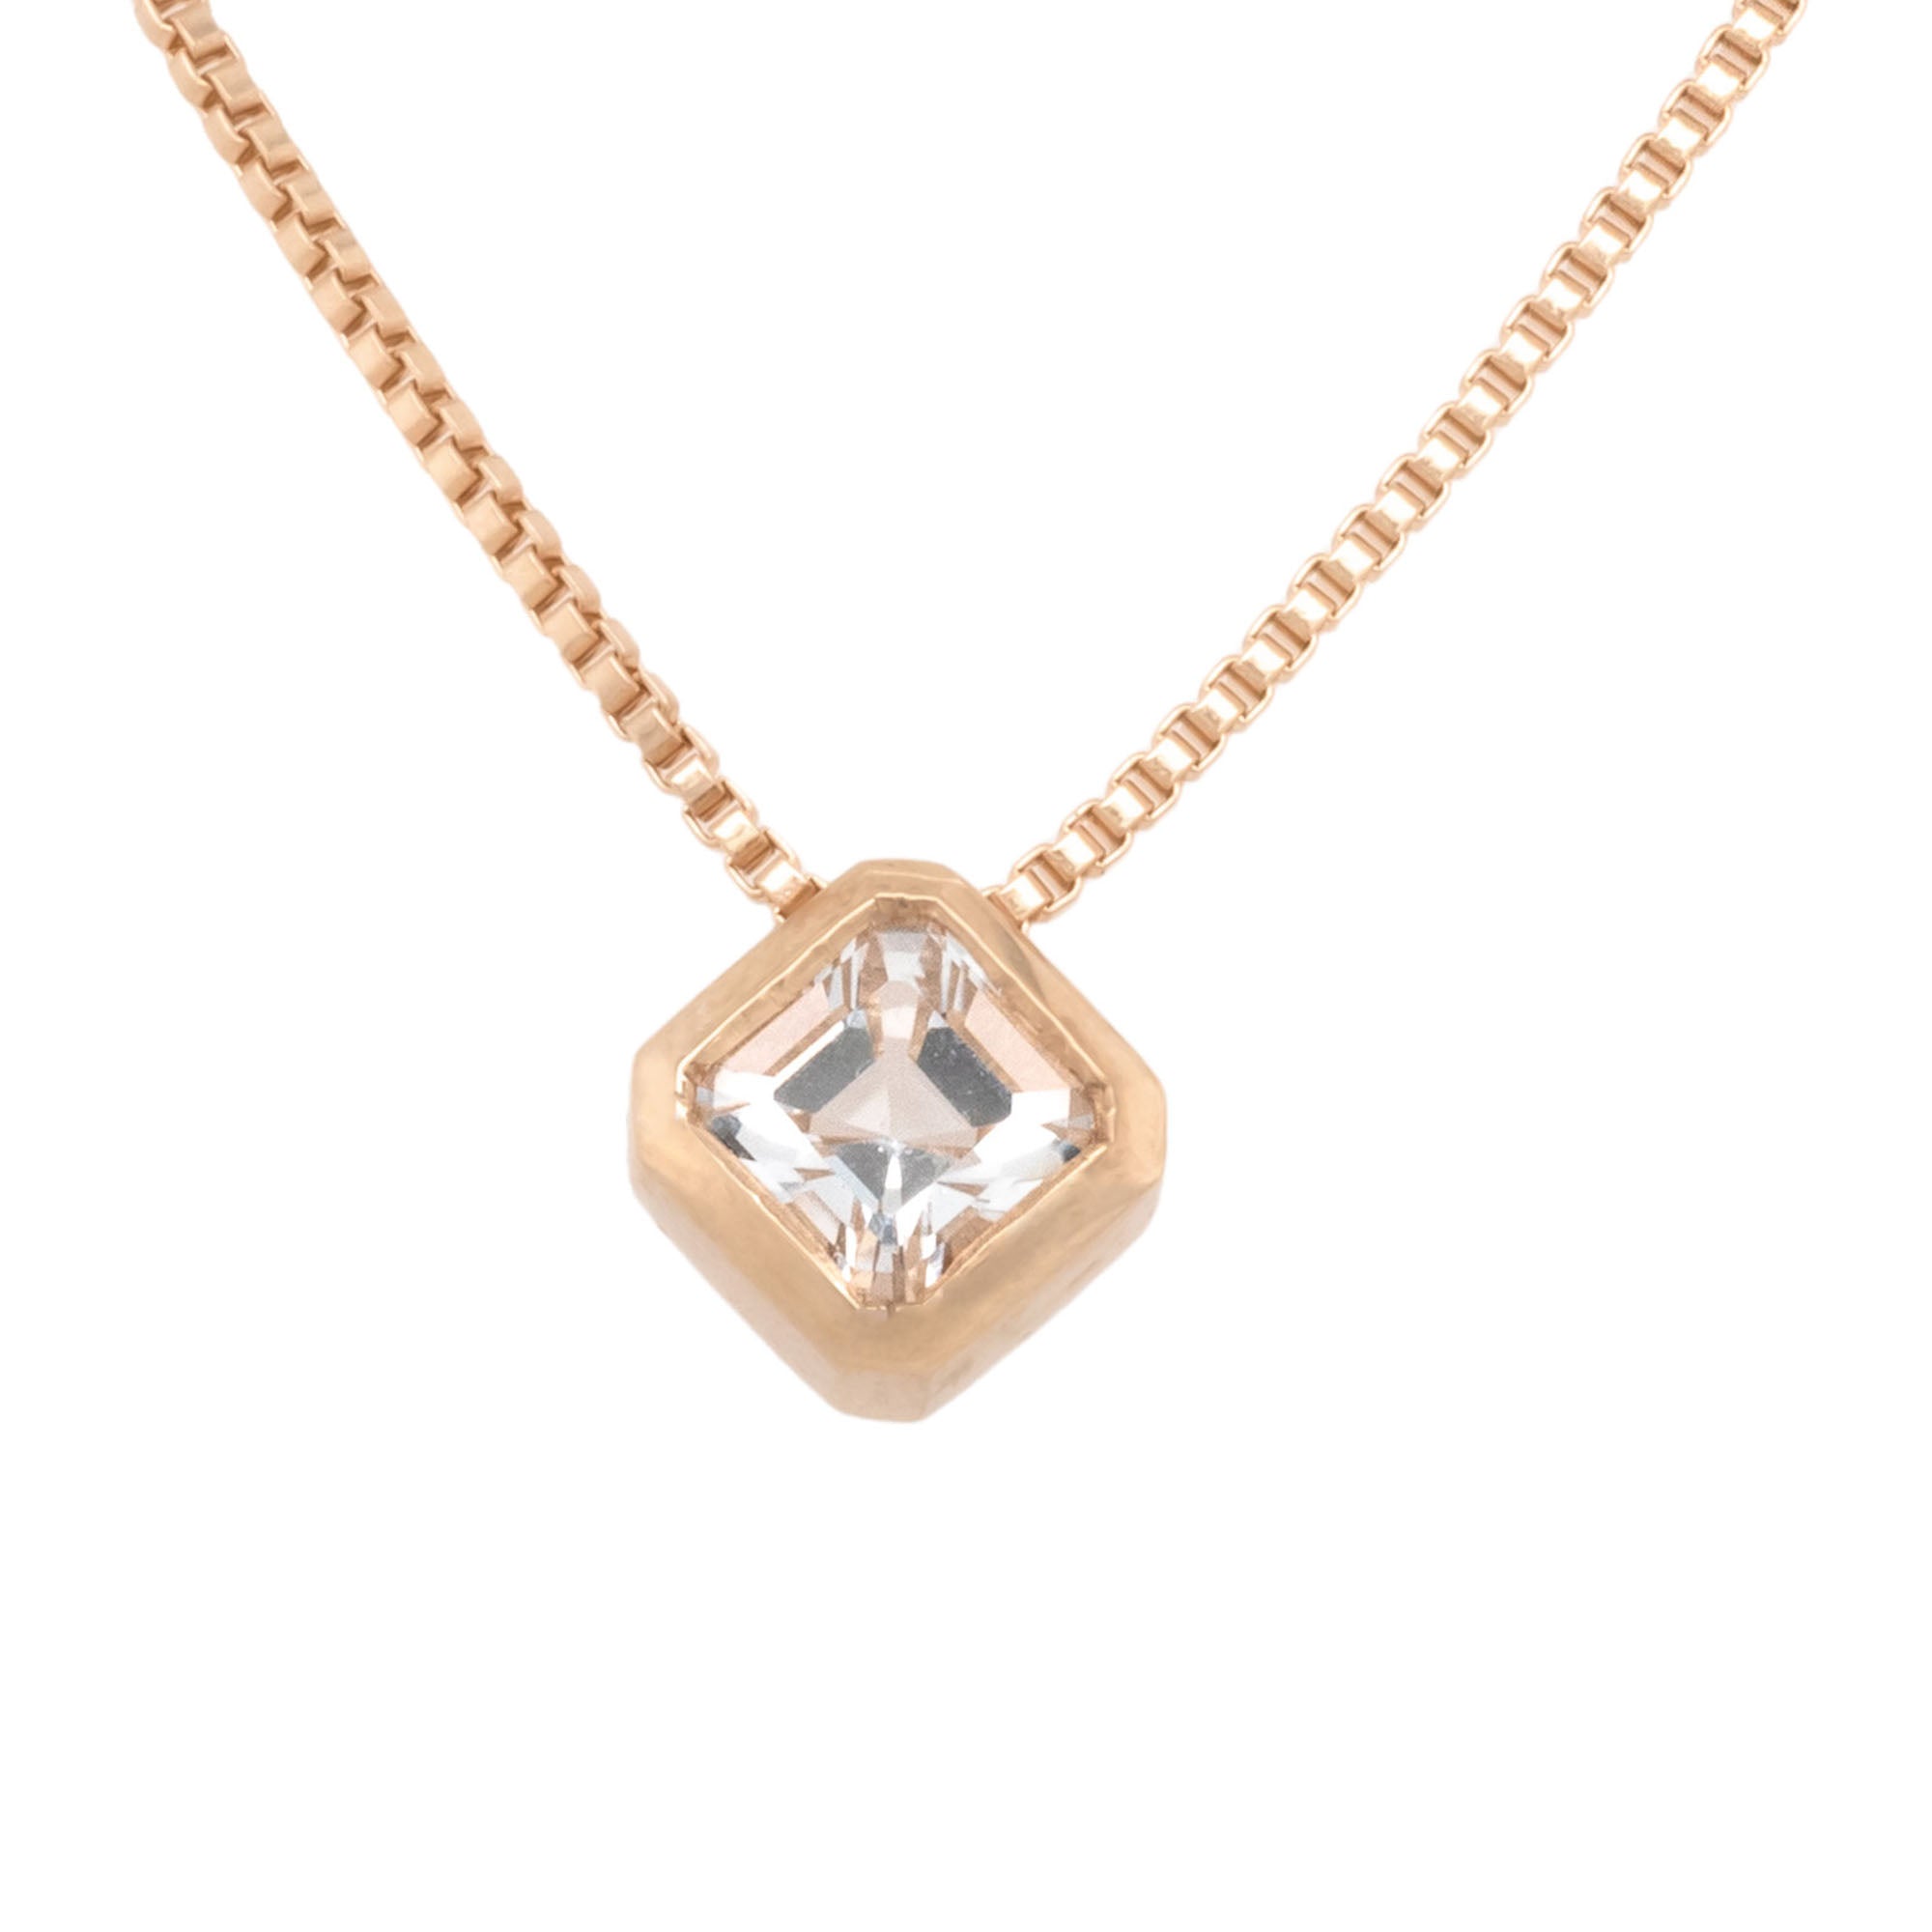 NESO | Abundance Herkimer Diamond Necklace | More Than This